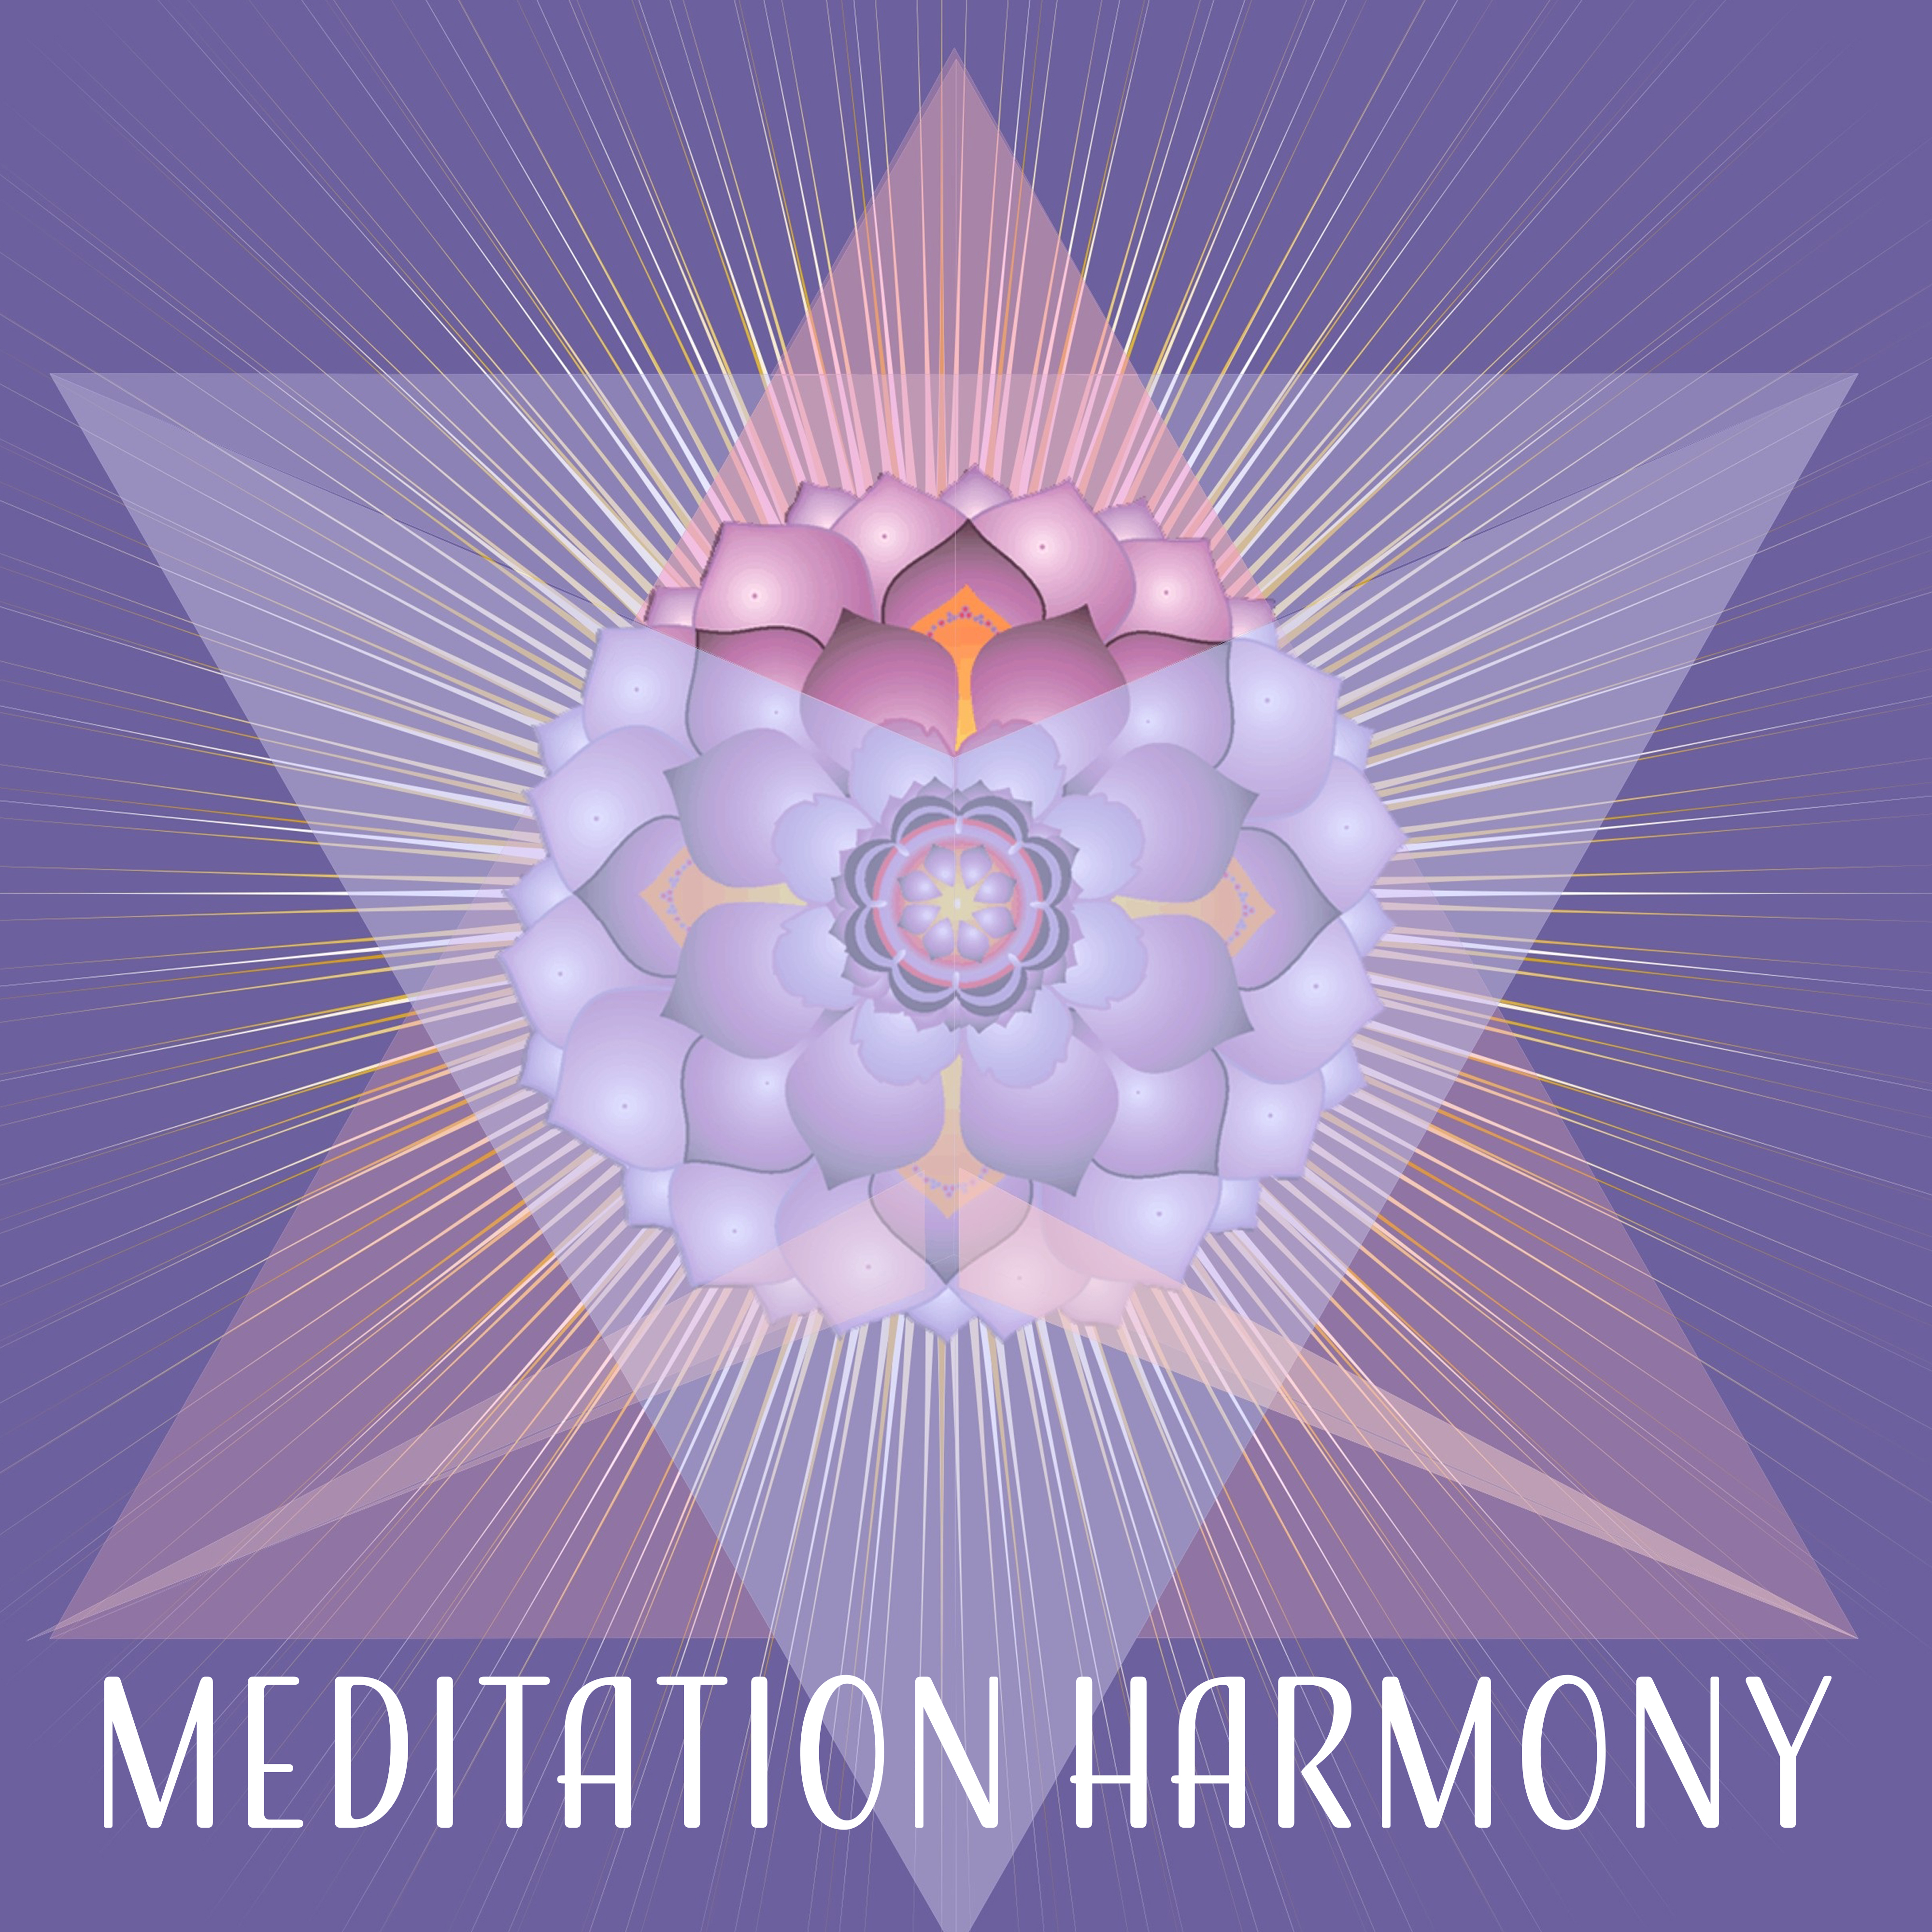 Meditation Harmony – Yoga, Deep Meditation, Mantra, Tantra, Mindfulness, New Age 2017